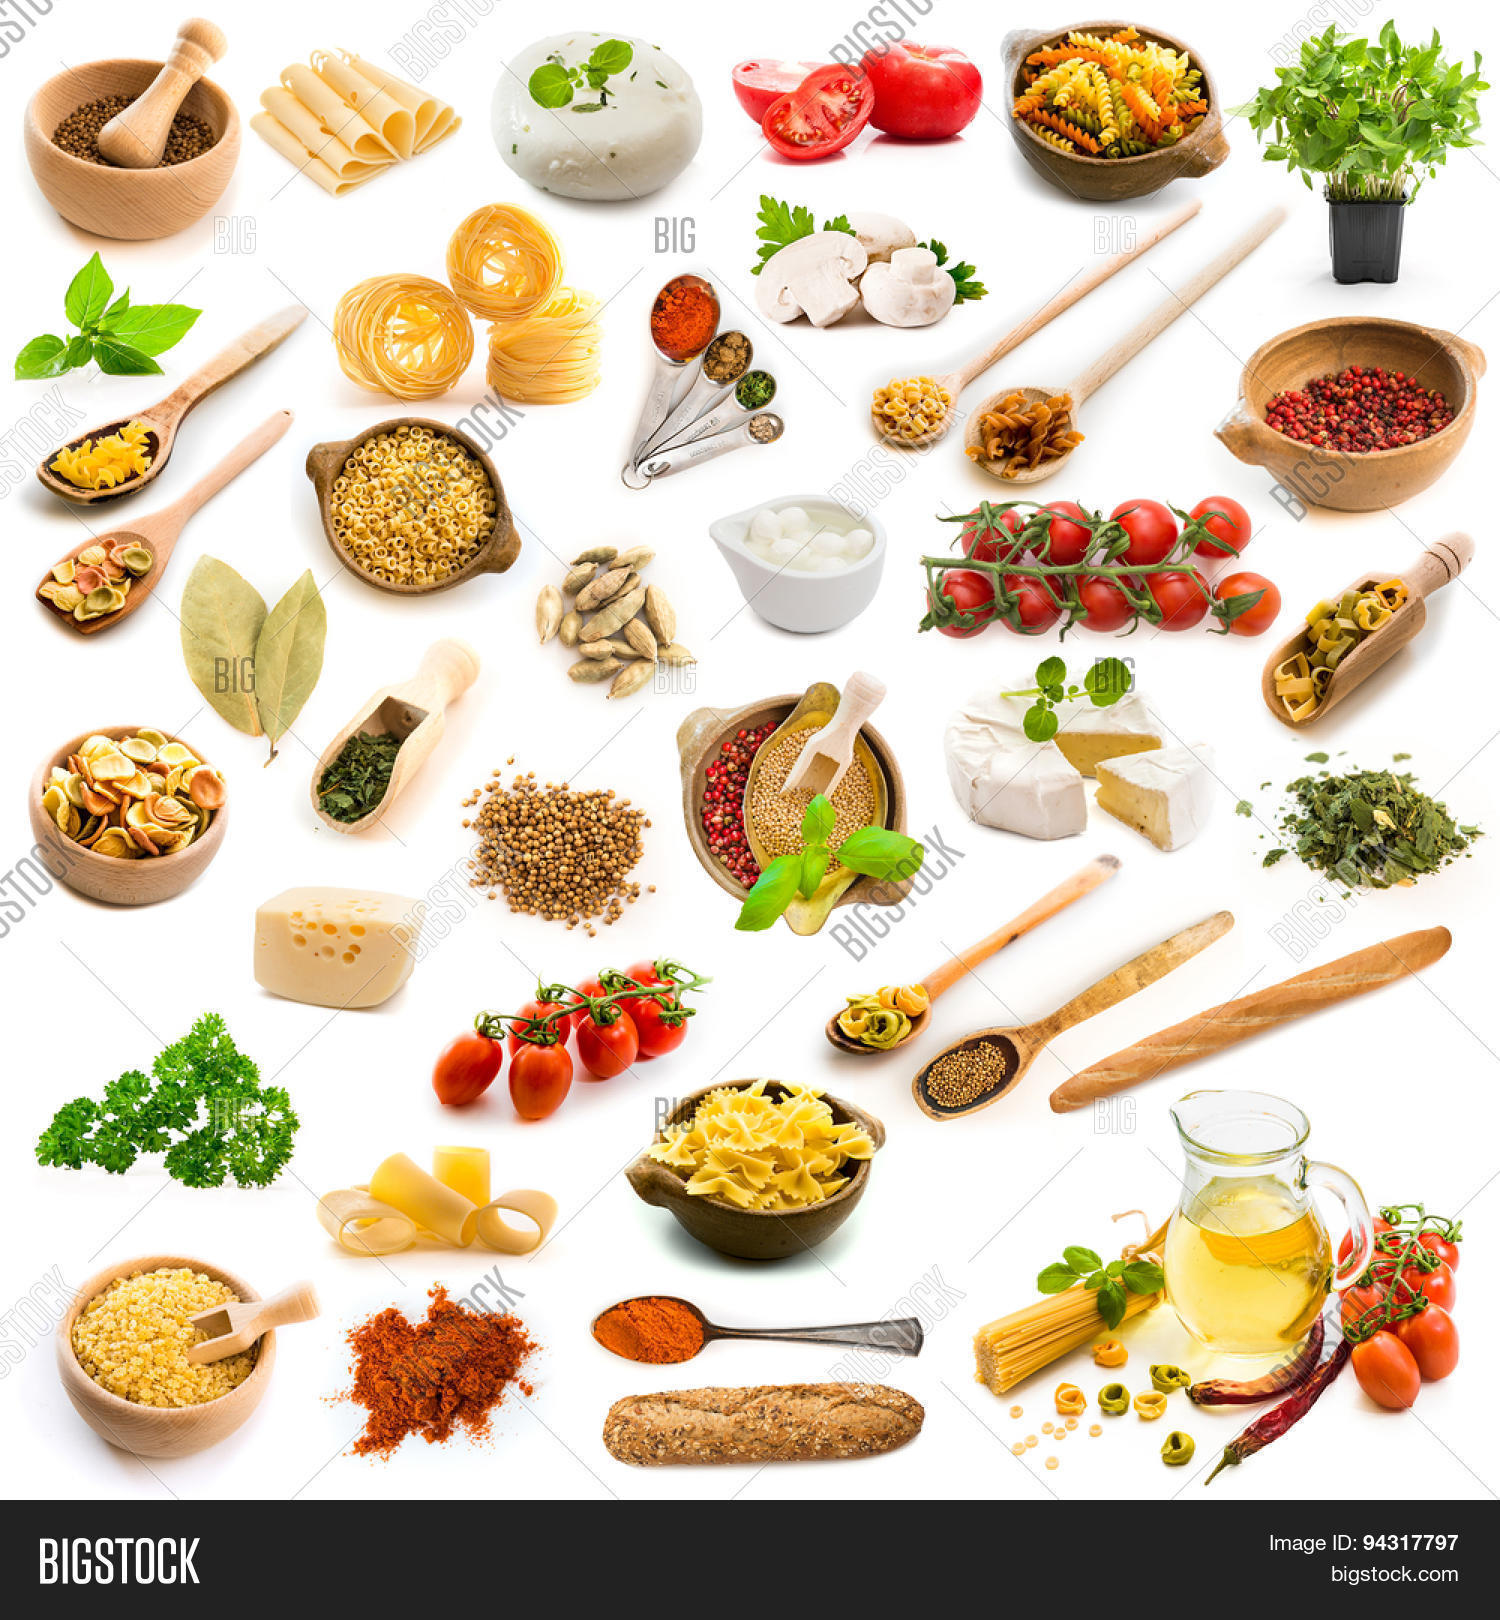 Collage Food Ingredients Italian Image & Photo | Bigstock